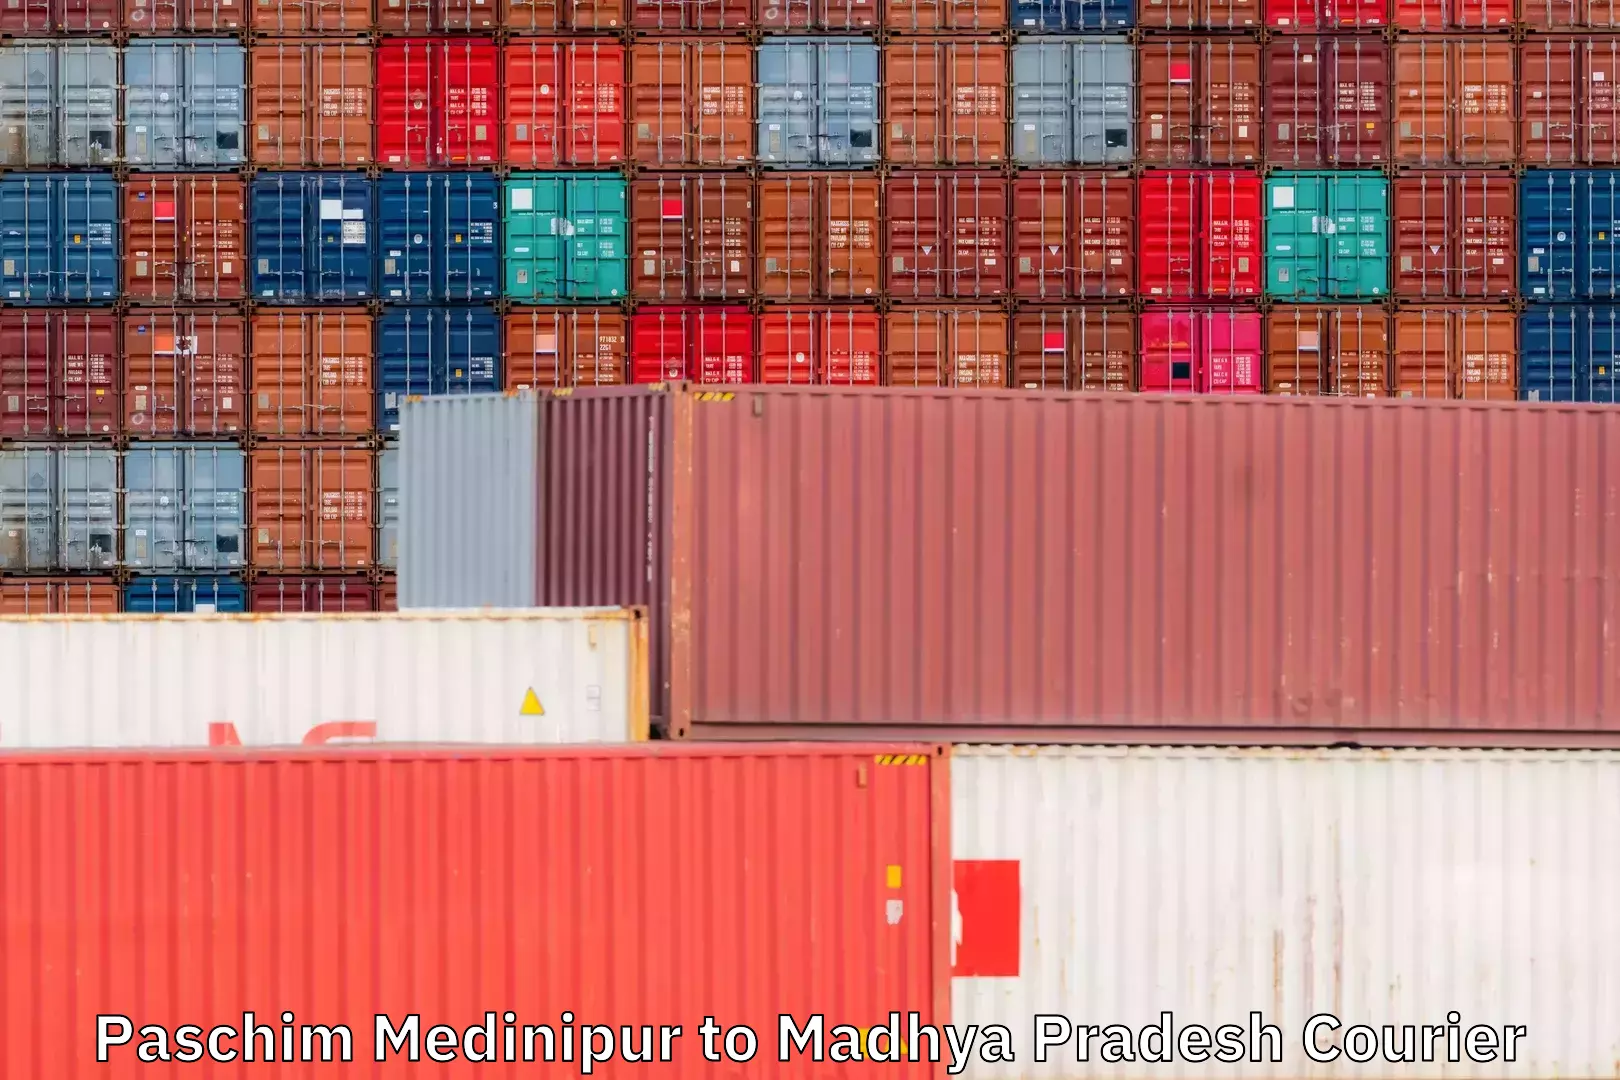 Professional courier handling Paschim Medinipur to Madhya Pradesh